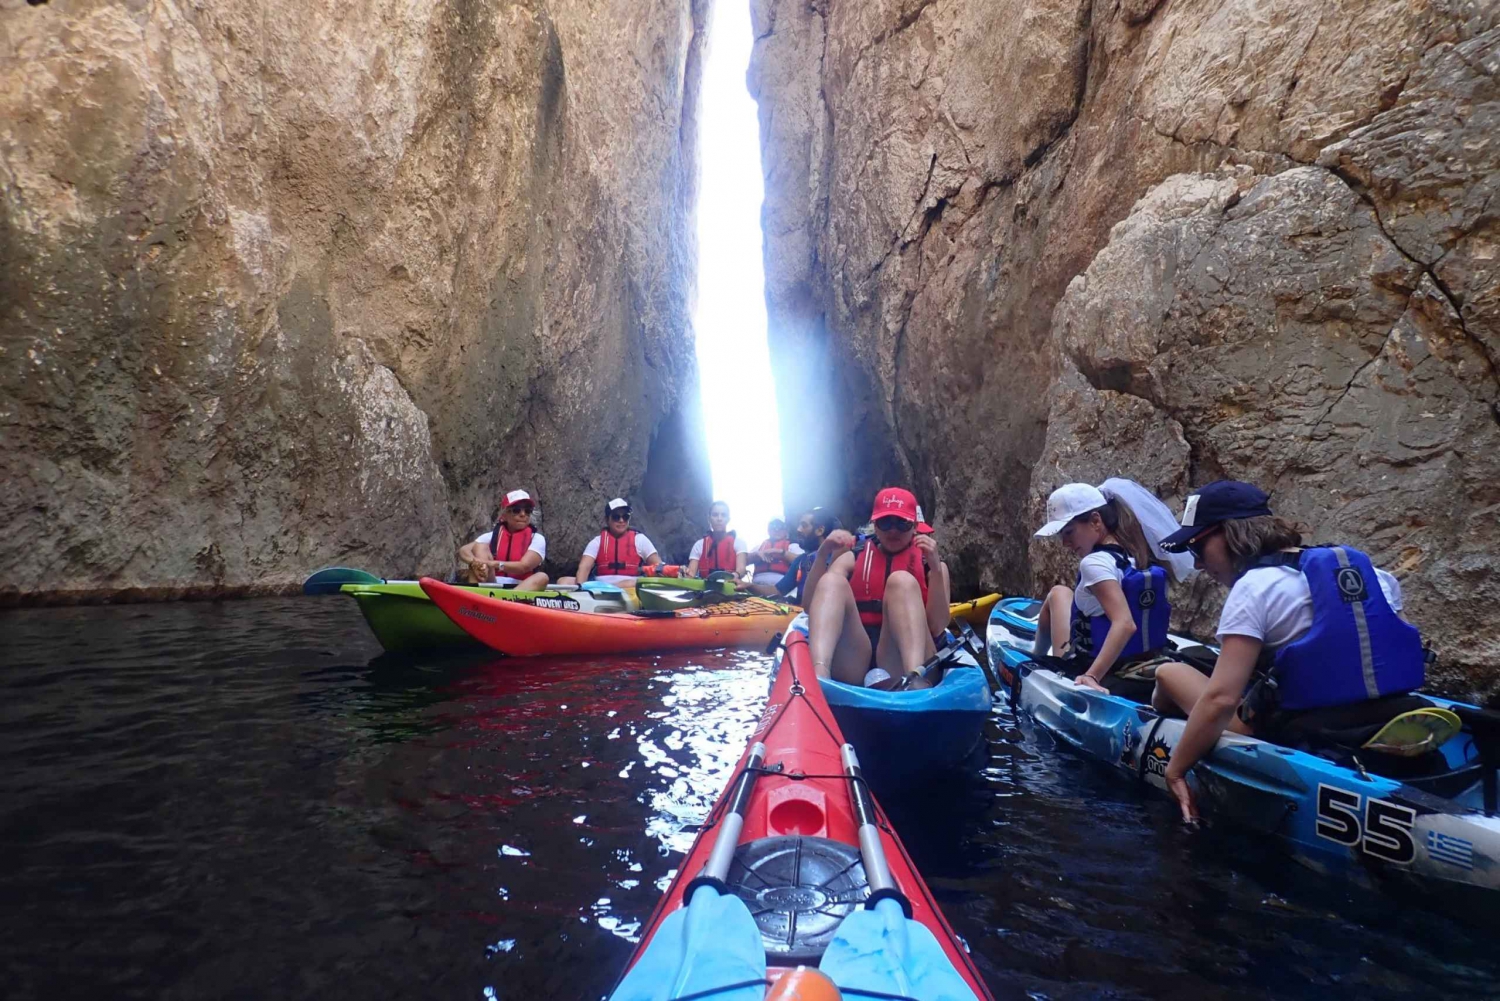 Atene: Avventura in kayak in mare sulla costa sud/est